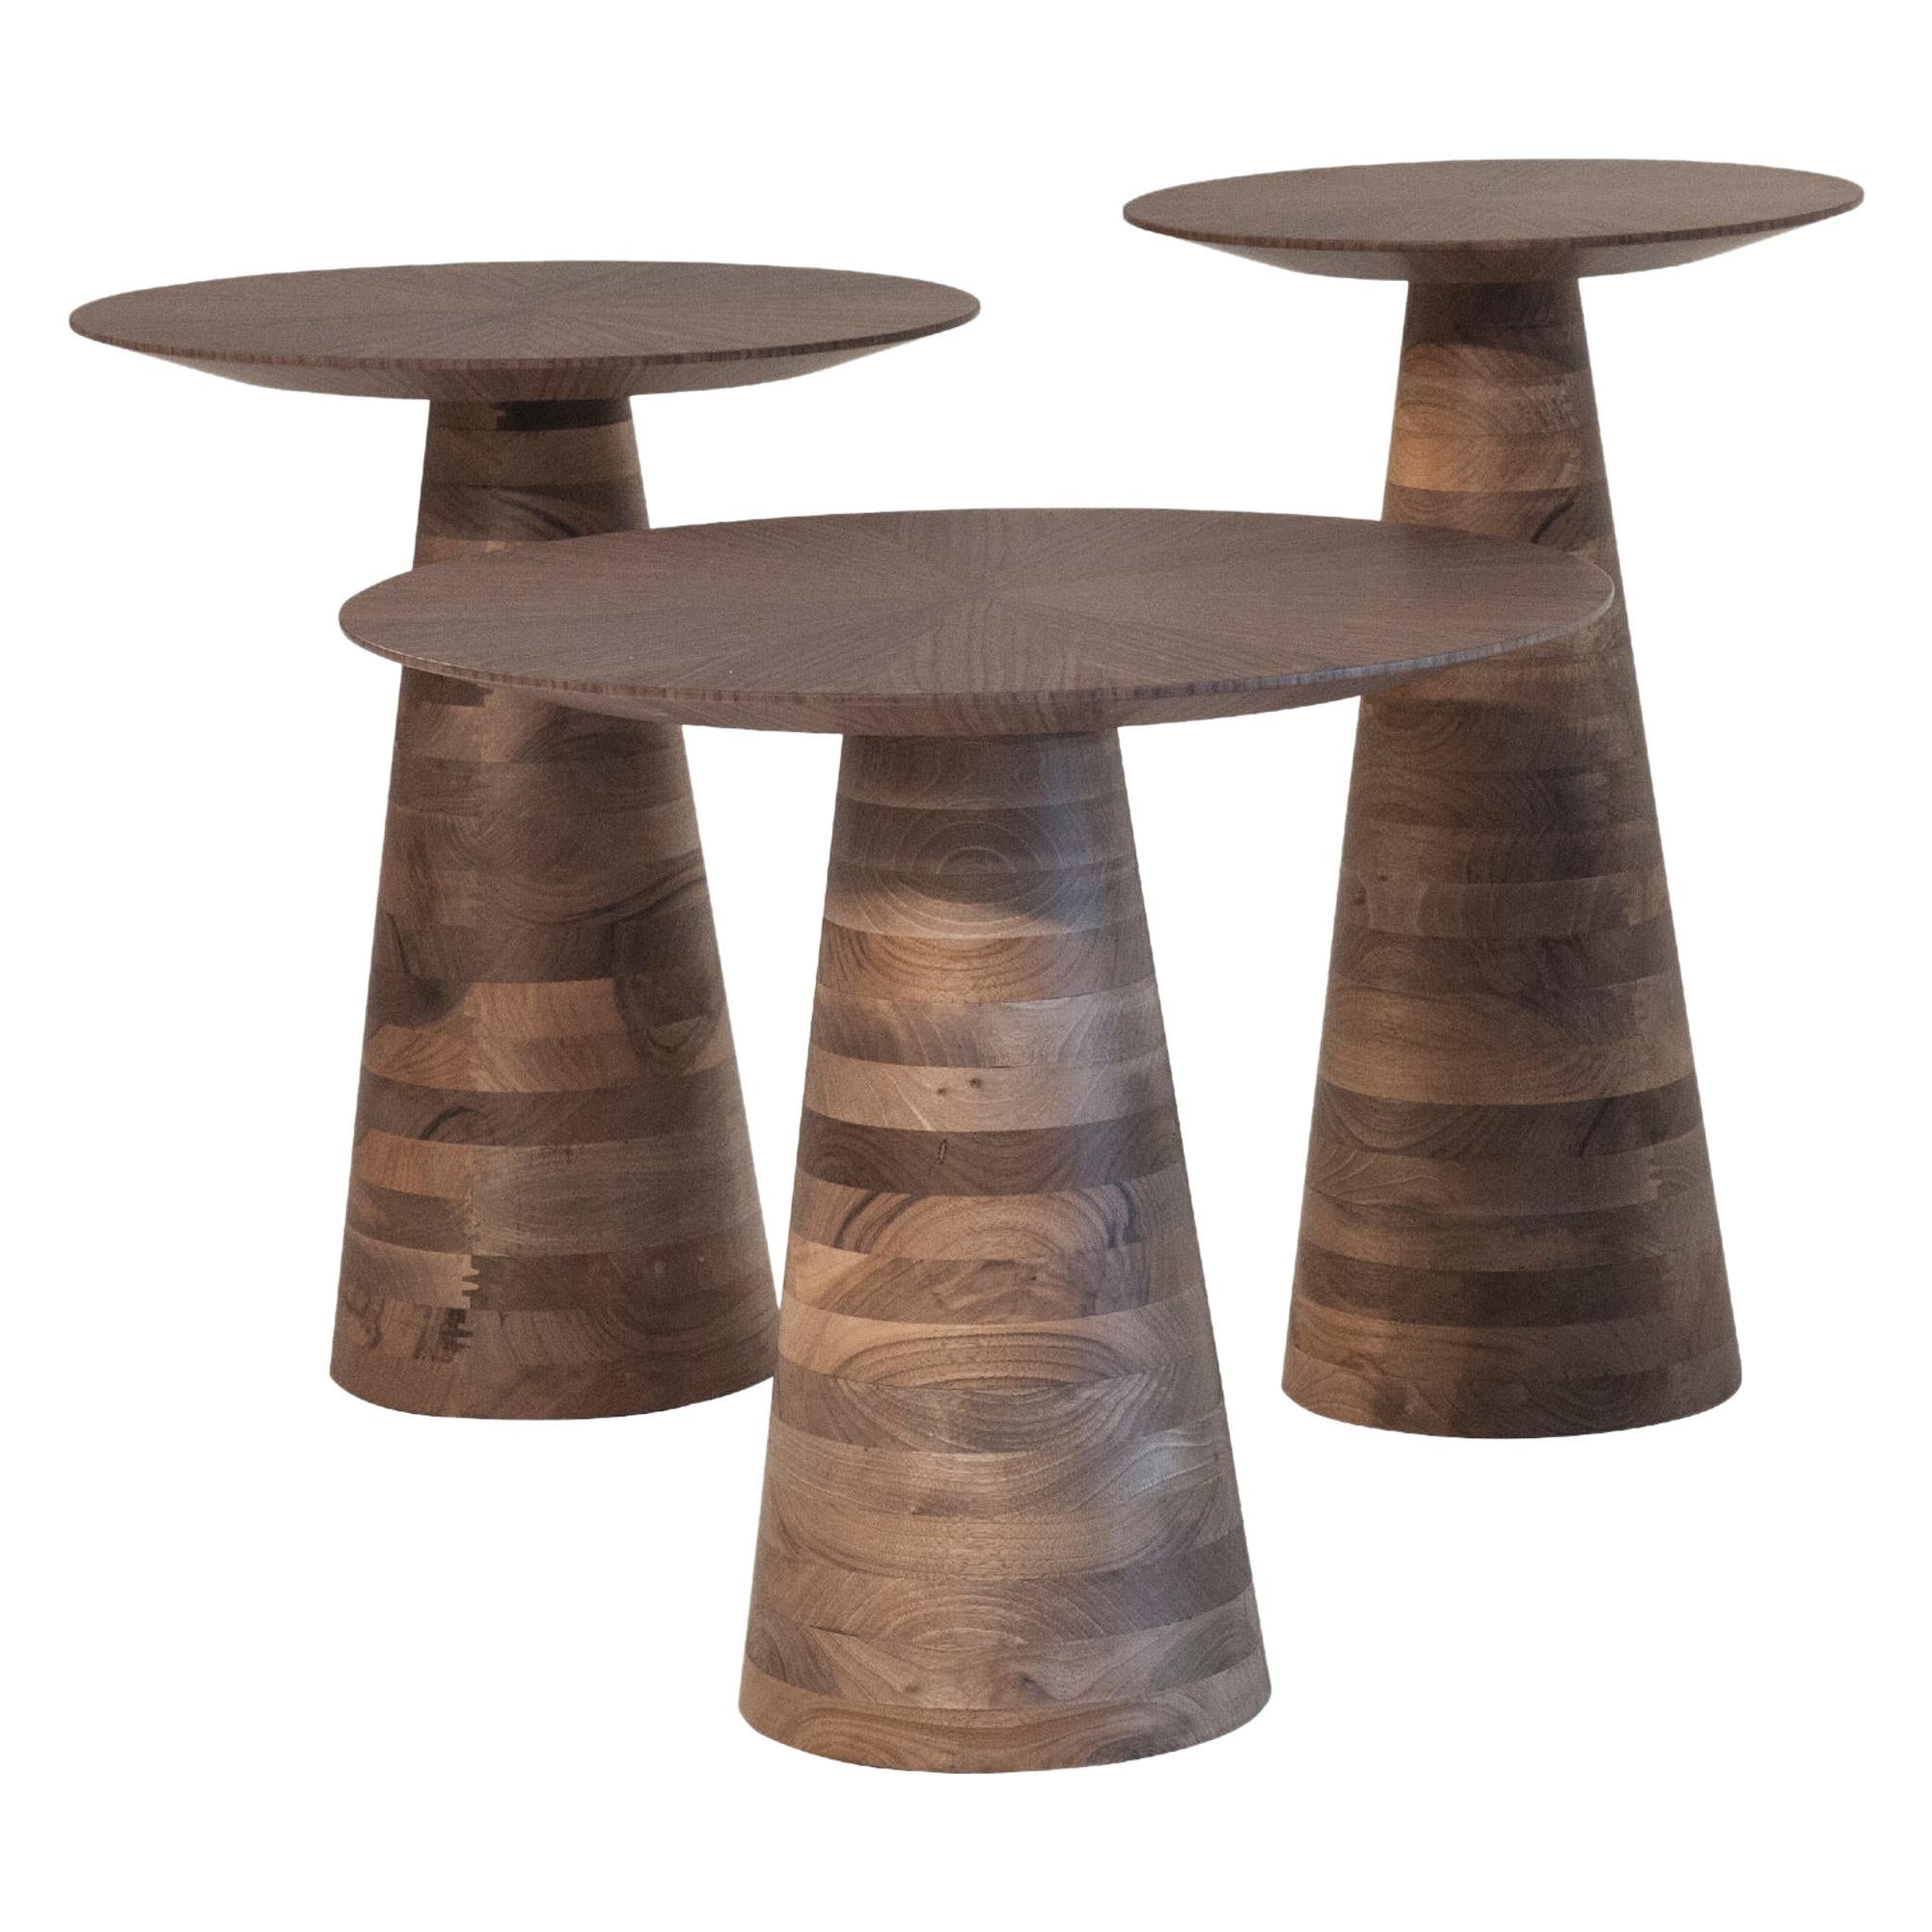 Goreme Side Tables, Solid Walnut Wood Side Tables